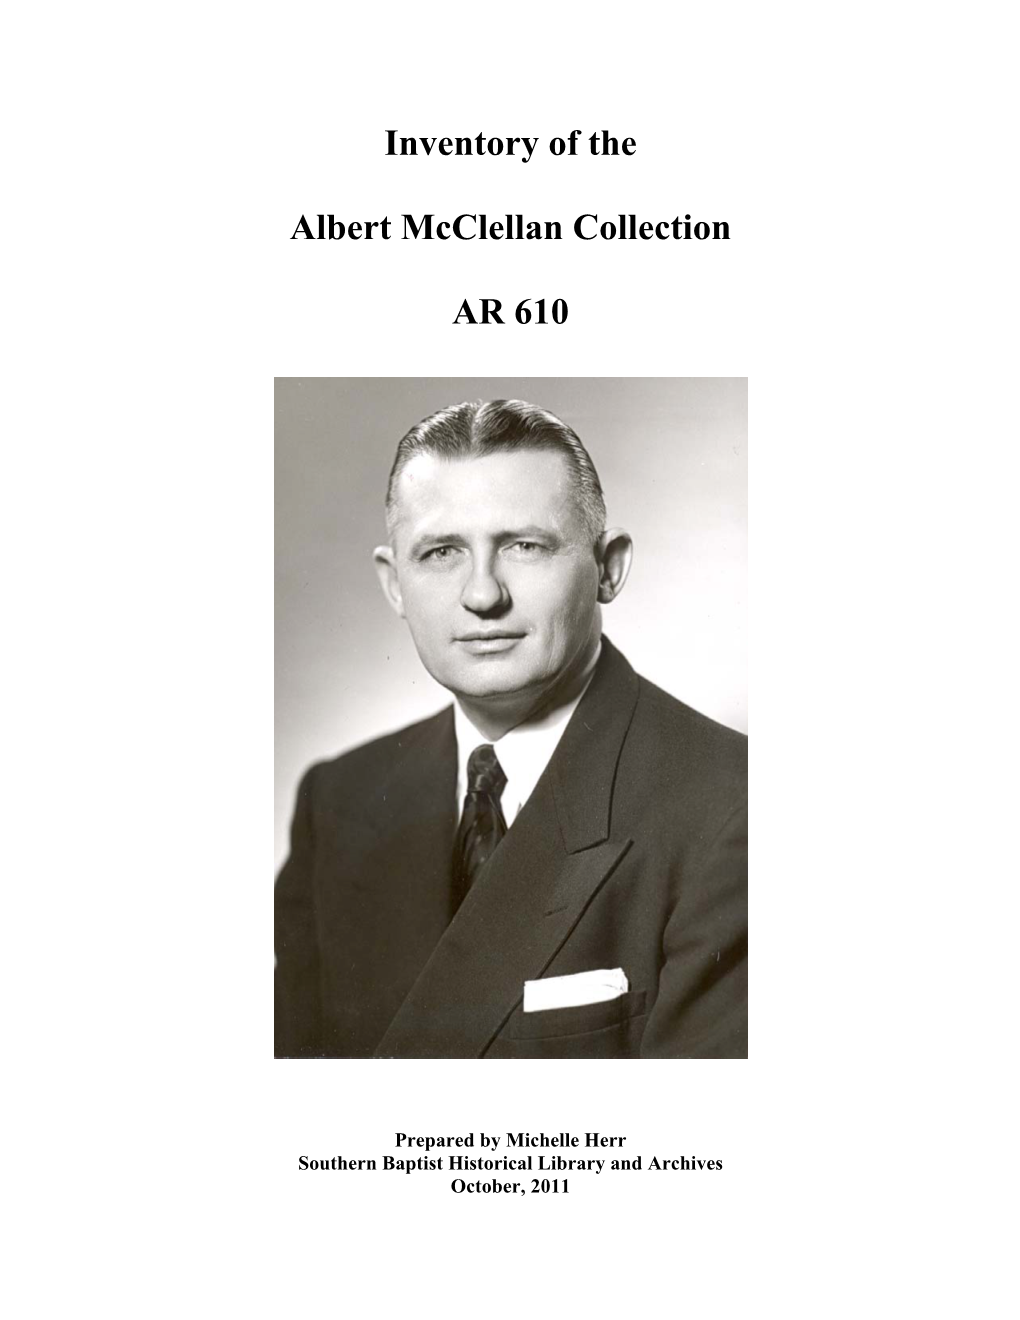 Albert Mcclellan Collection